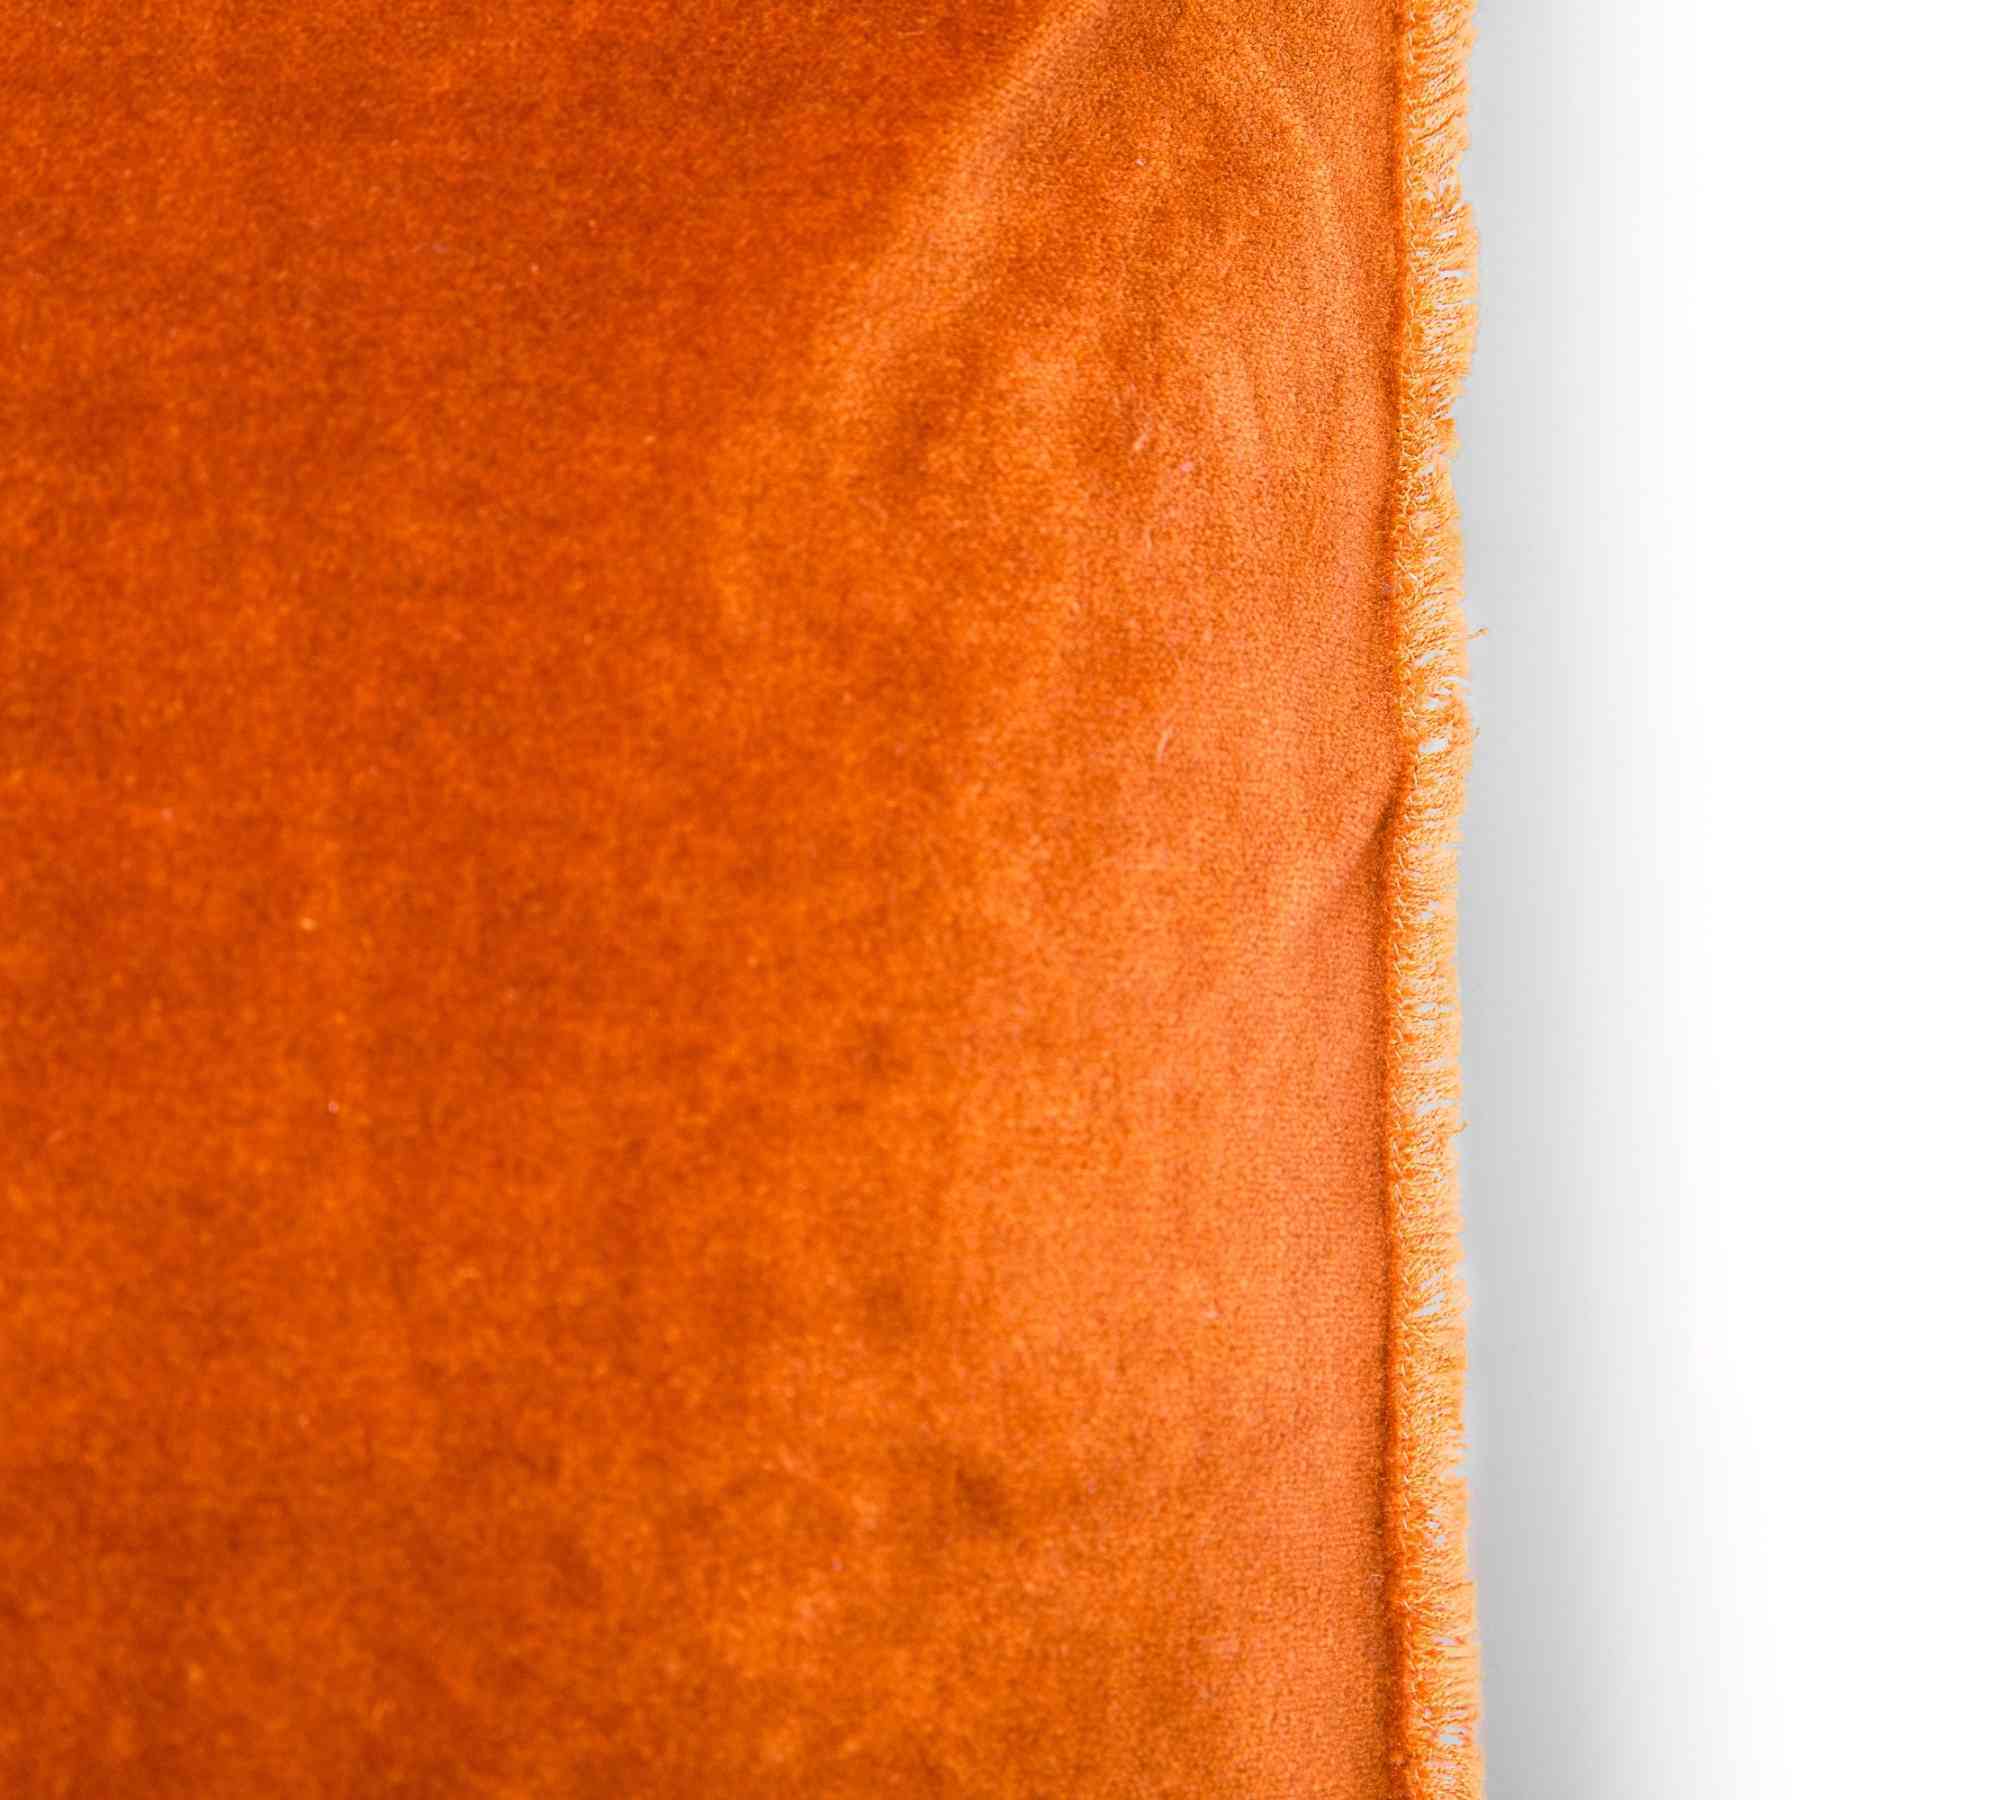 Kissenhülle Baumwolle Orange 45 x 45cm 1